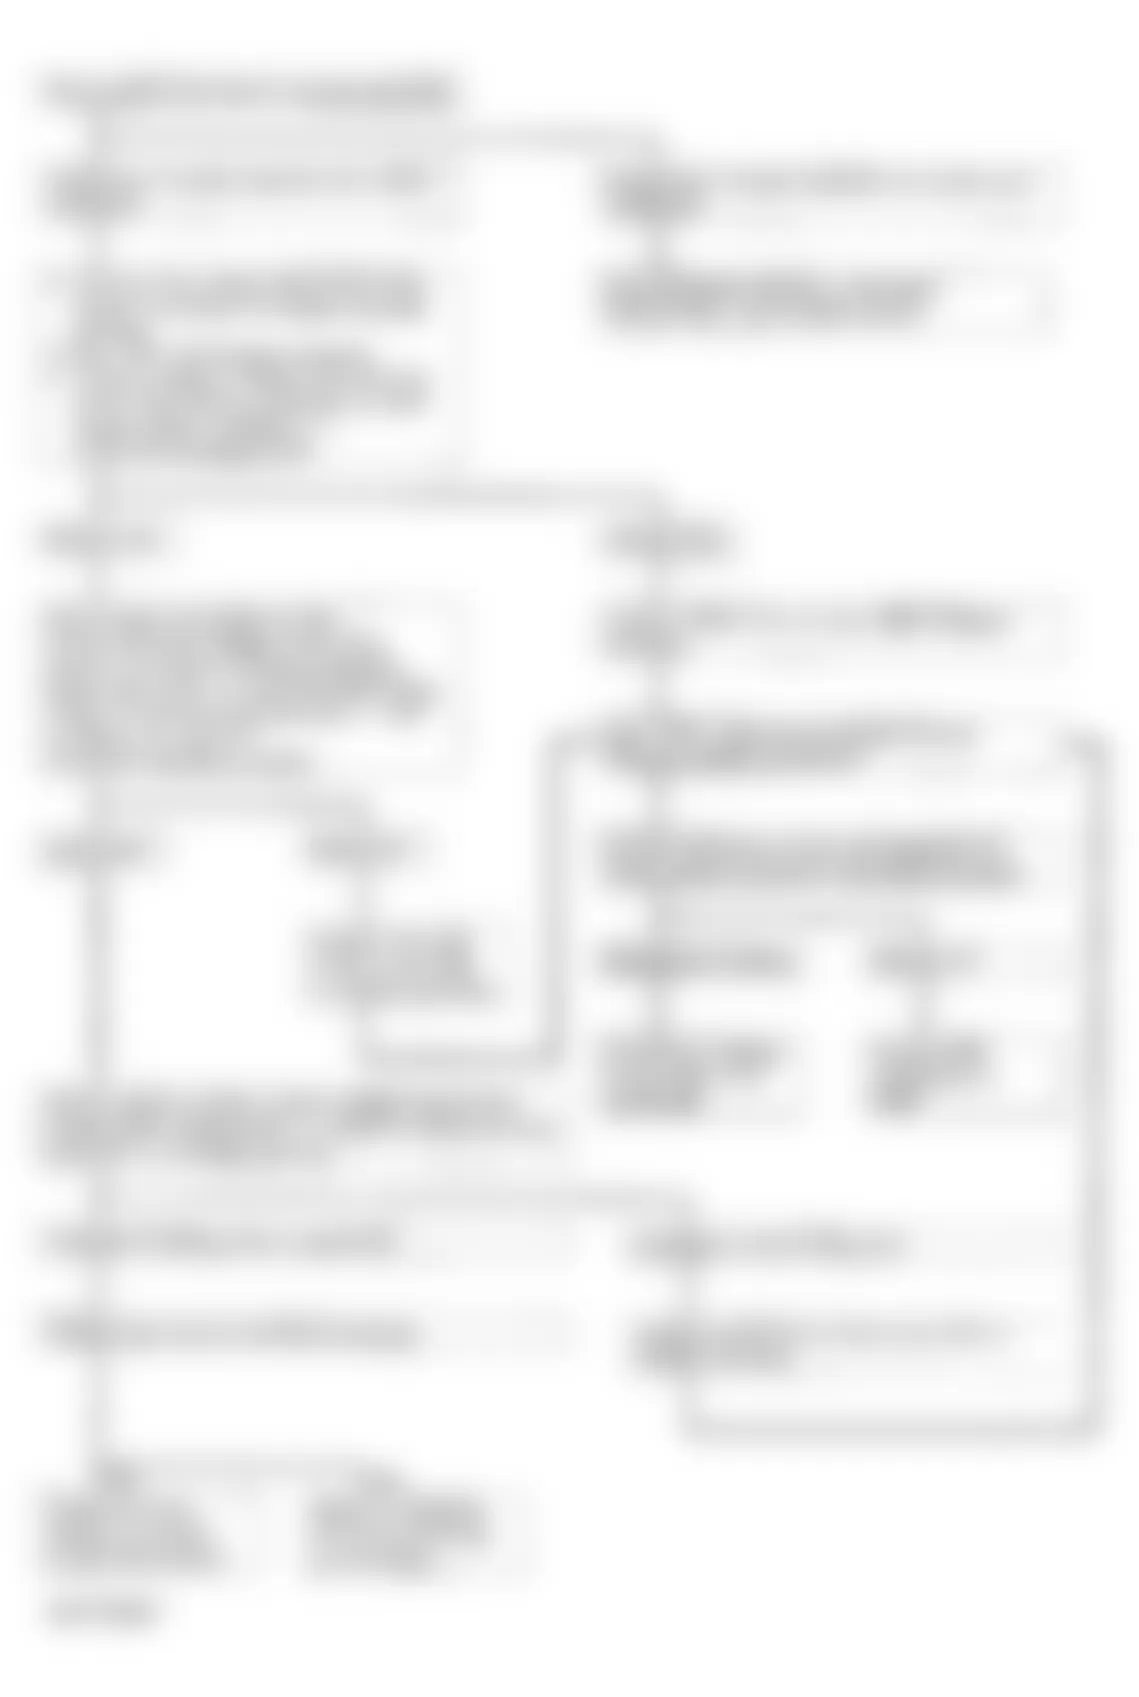 Isuzu Pickup S 1994 - Component Locations -  Code 61, 62 - Diagnostic Flowchart (2 Of 2)